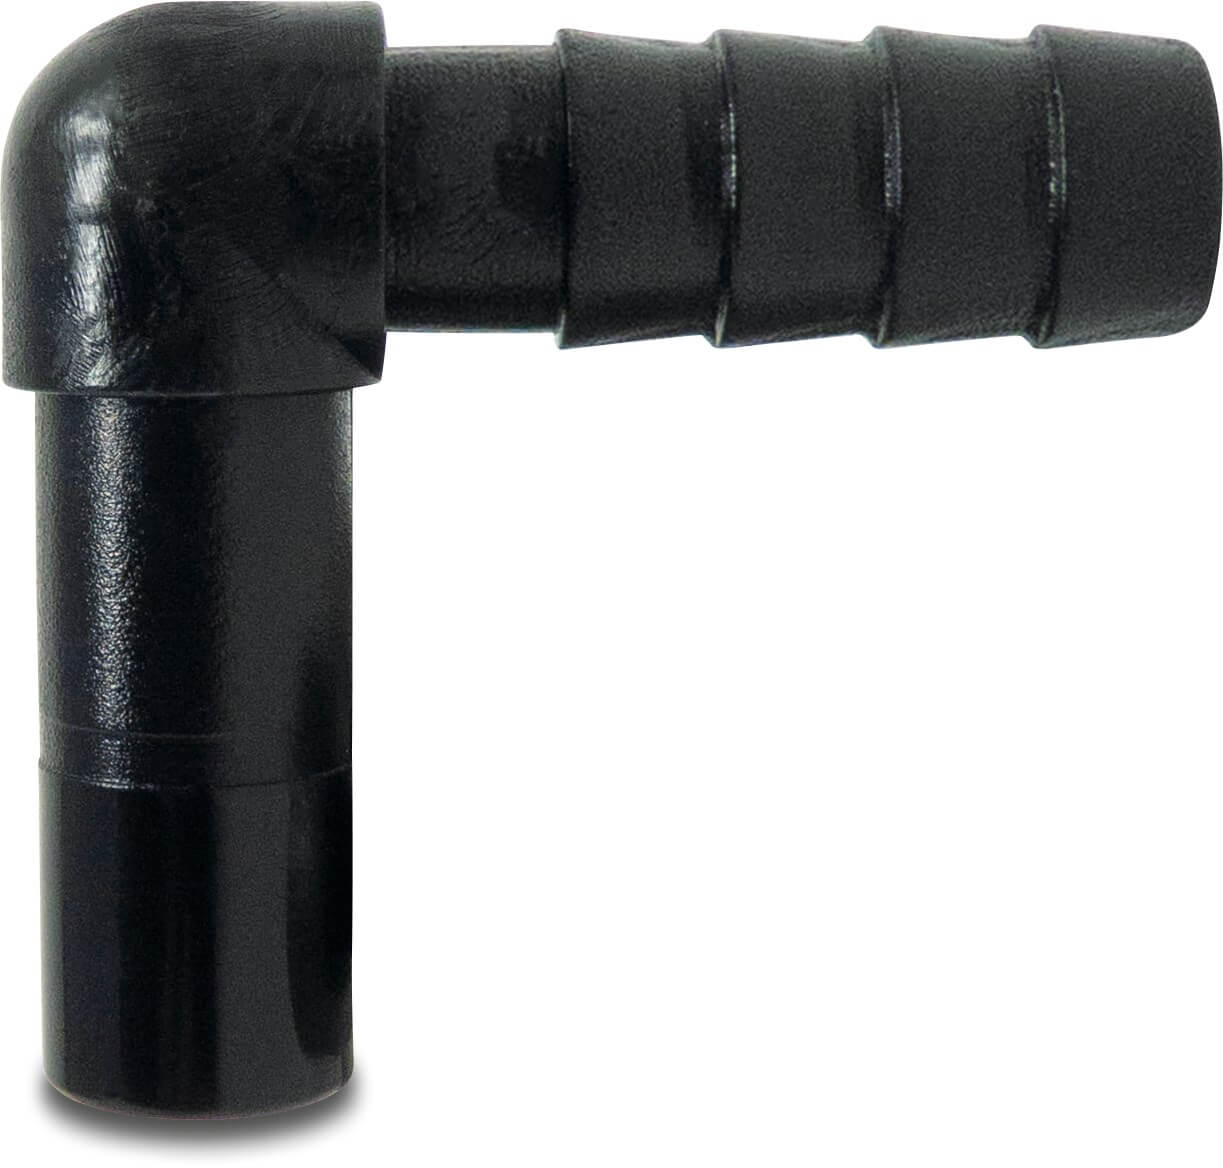 Adaptor elbow 90° POM 10 mm x 6 mm spigot x barbed 16bar black WRAS type Aquaspeed